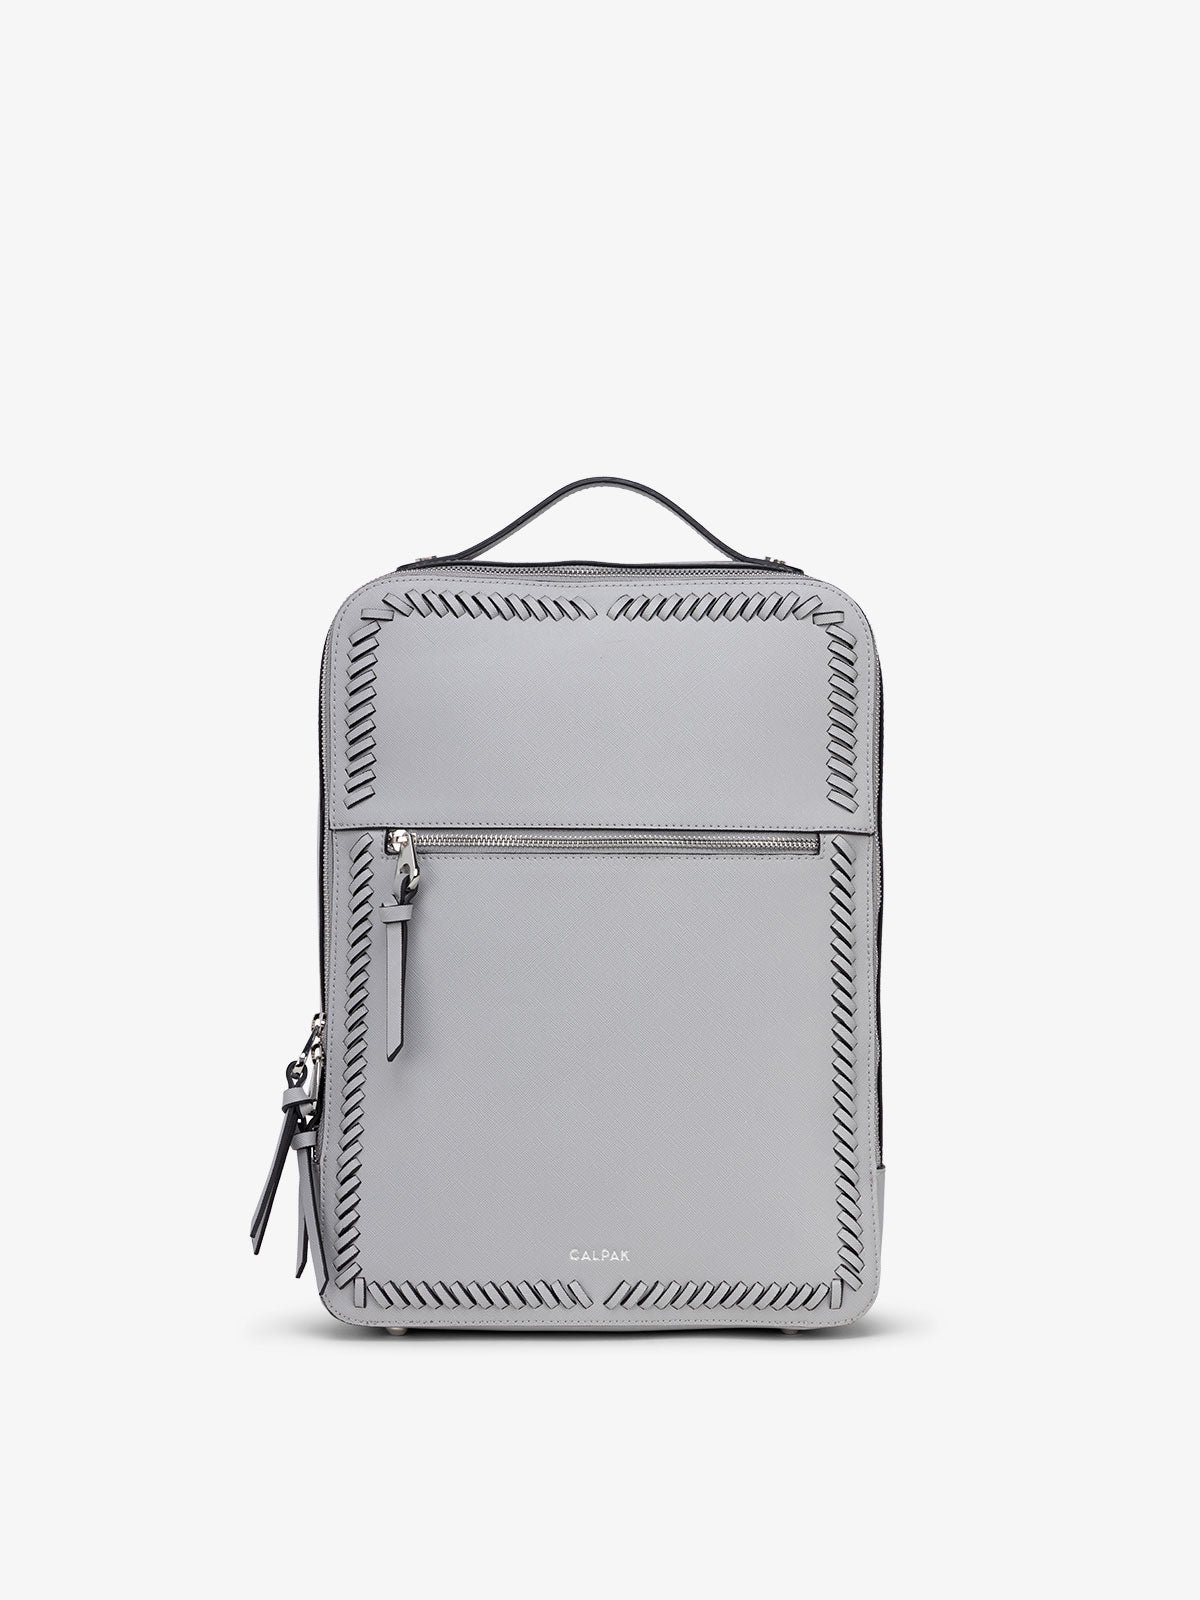 CALPAK Kaya laptop backpack in cool grey